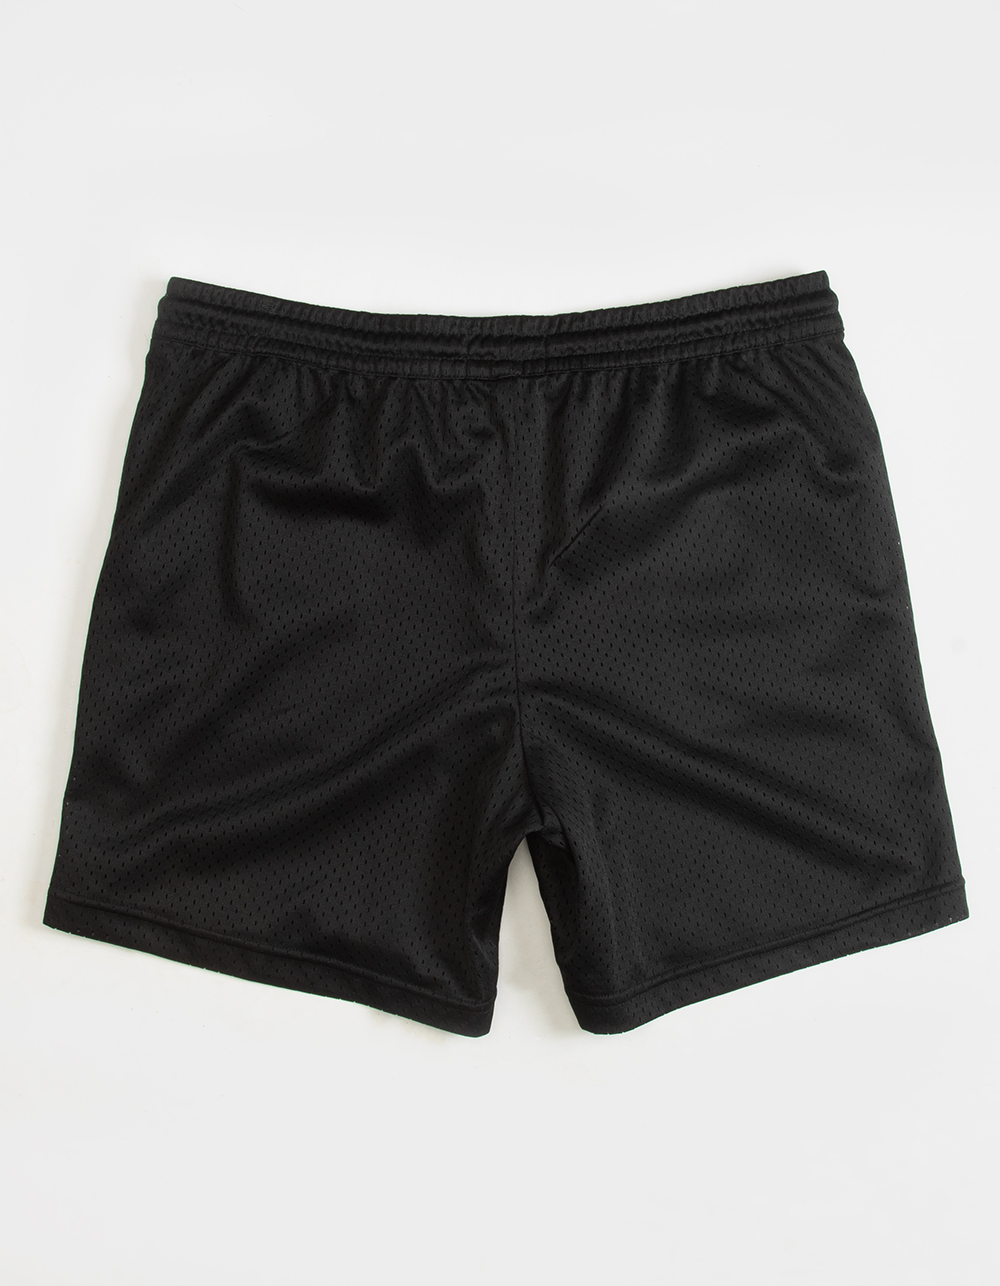 Rsq 5 Mesh Shorts - Black - X-Large